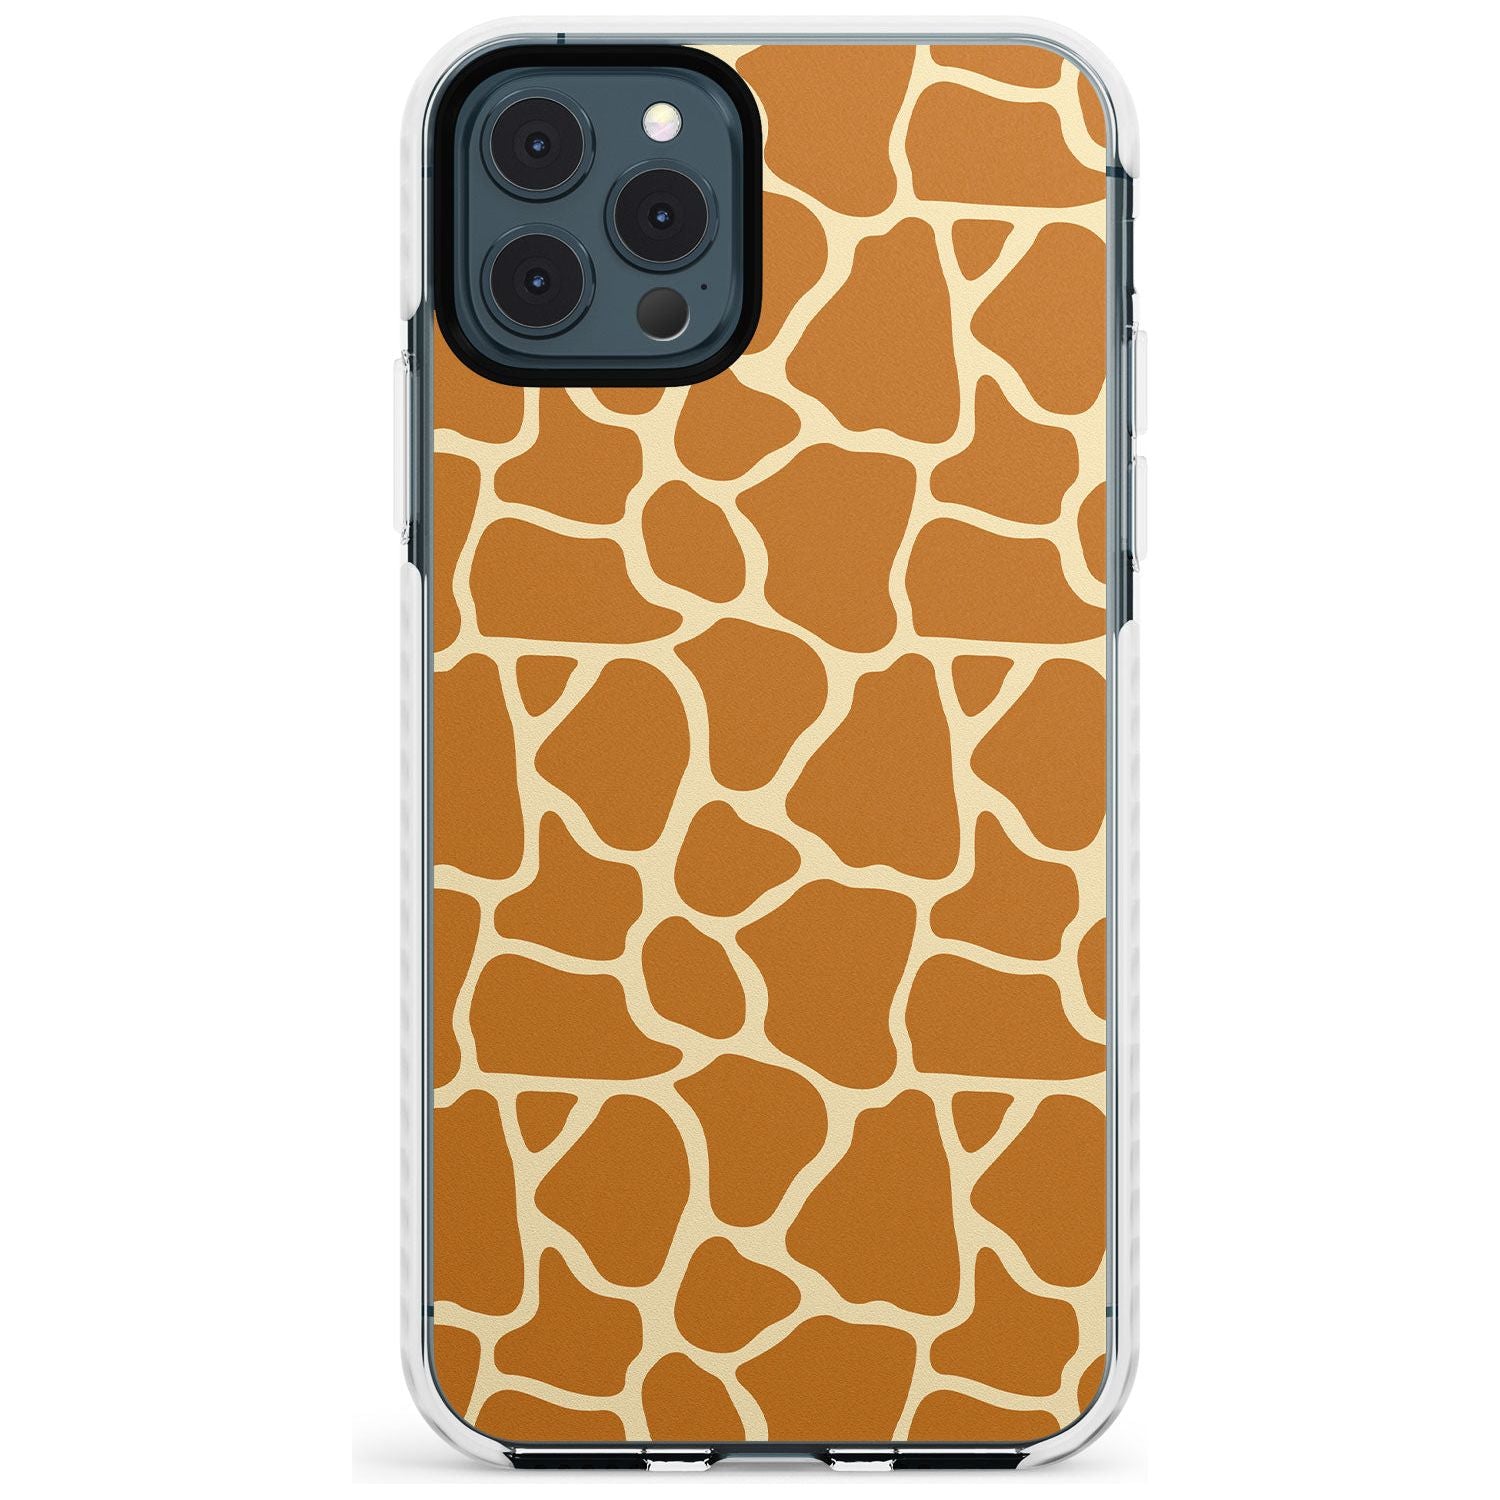 Giraffe Pattern Impact Phone Case for iPhone 11 Pro Max